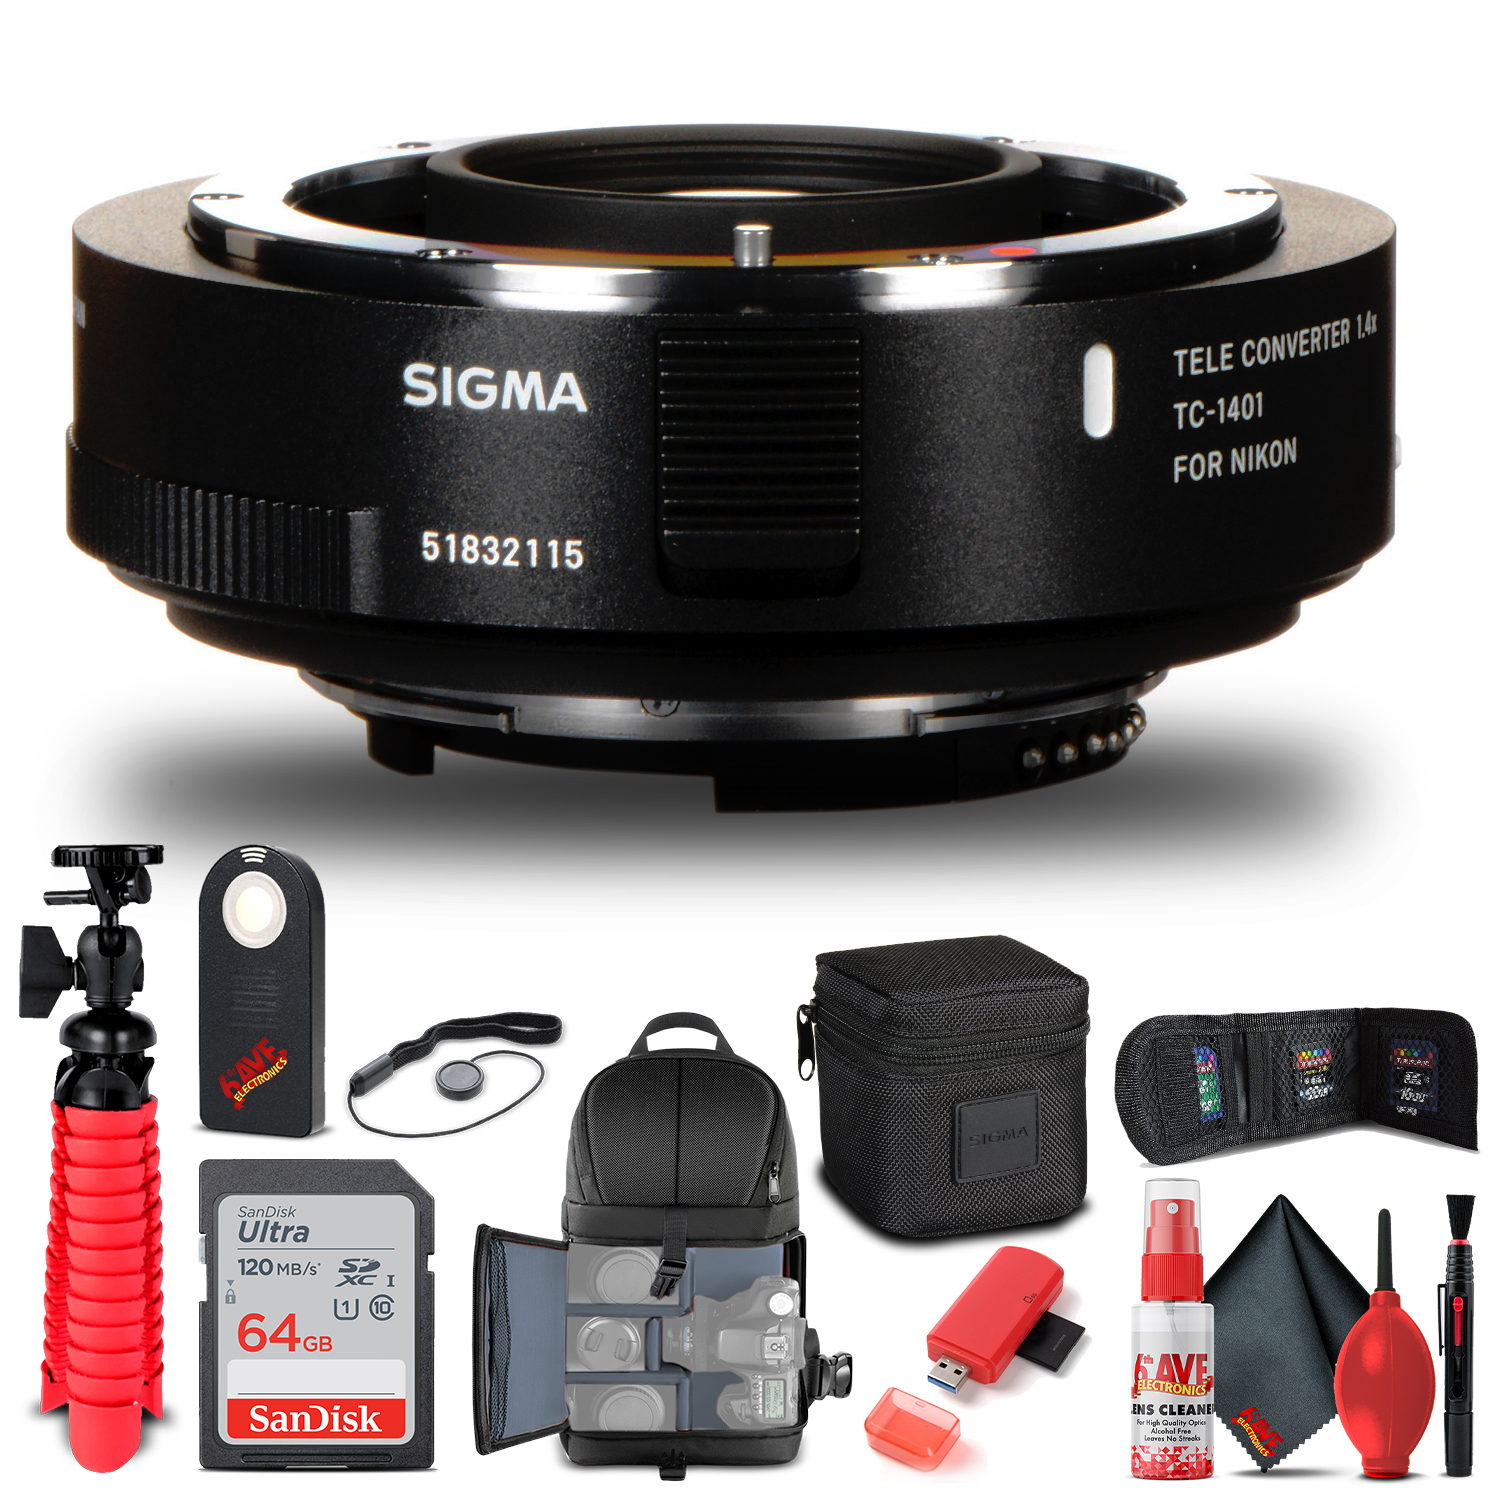 Sigma Tc 1401 1 4x Teleconverter For Nikon F Bundle Ebay